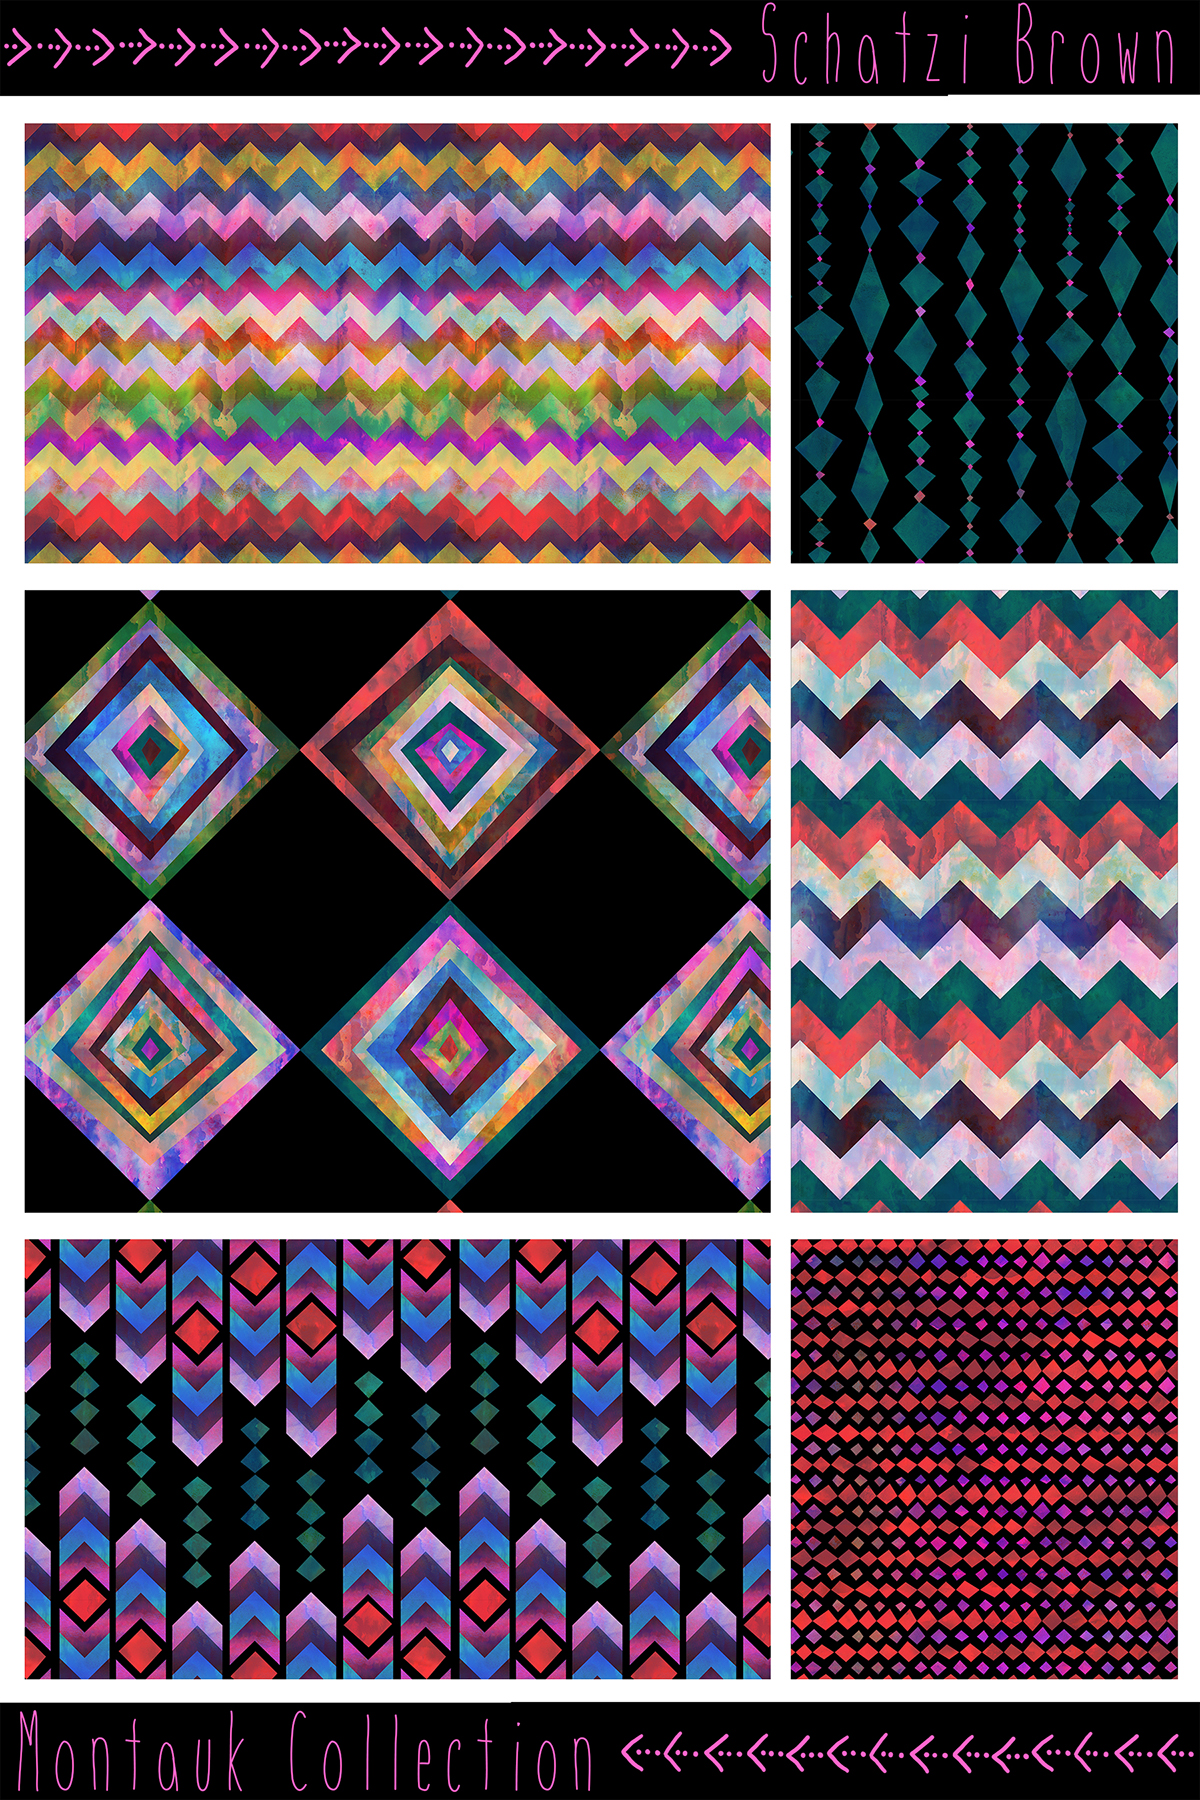 pattern textile Chevron geometric licensing designs SchatziBrown home decor bold geometric designs bright colors bedding kitchen lifestyle summer surf Product Mock-ups